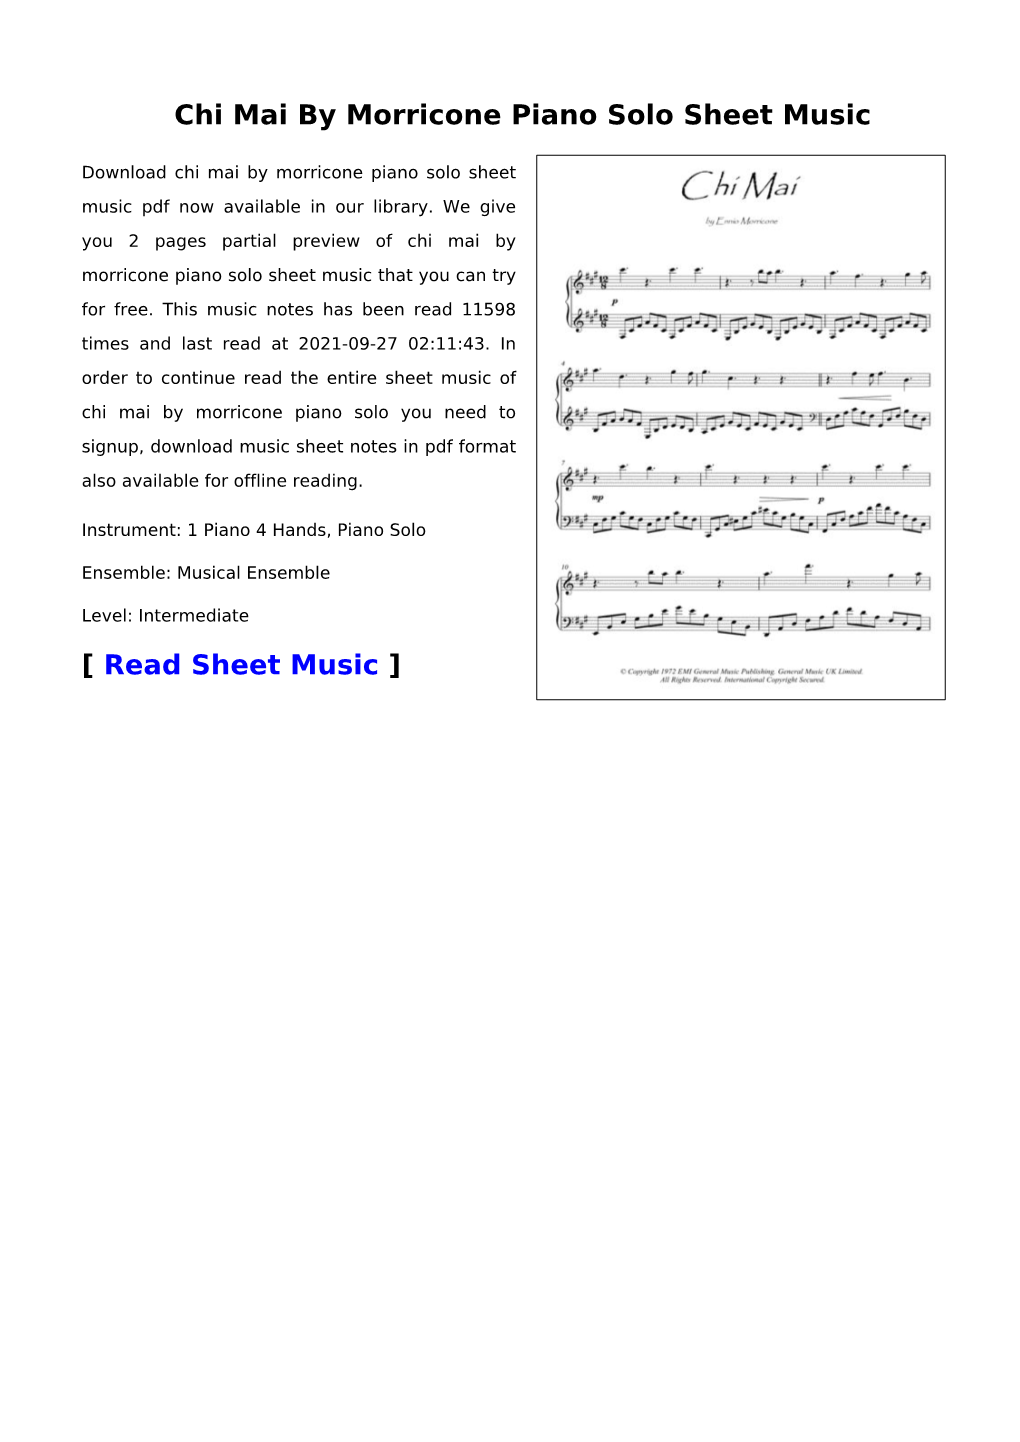 Chi Mai by Morricone Piano Solo Sheet Music